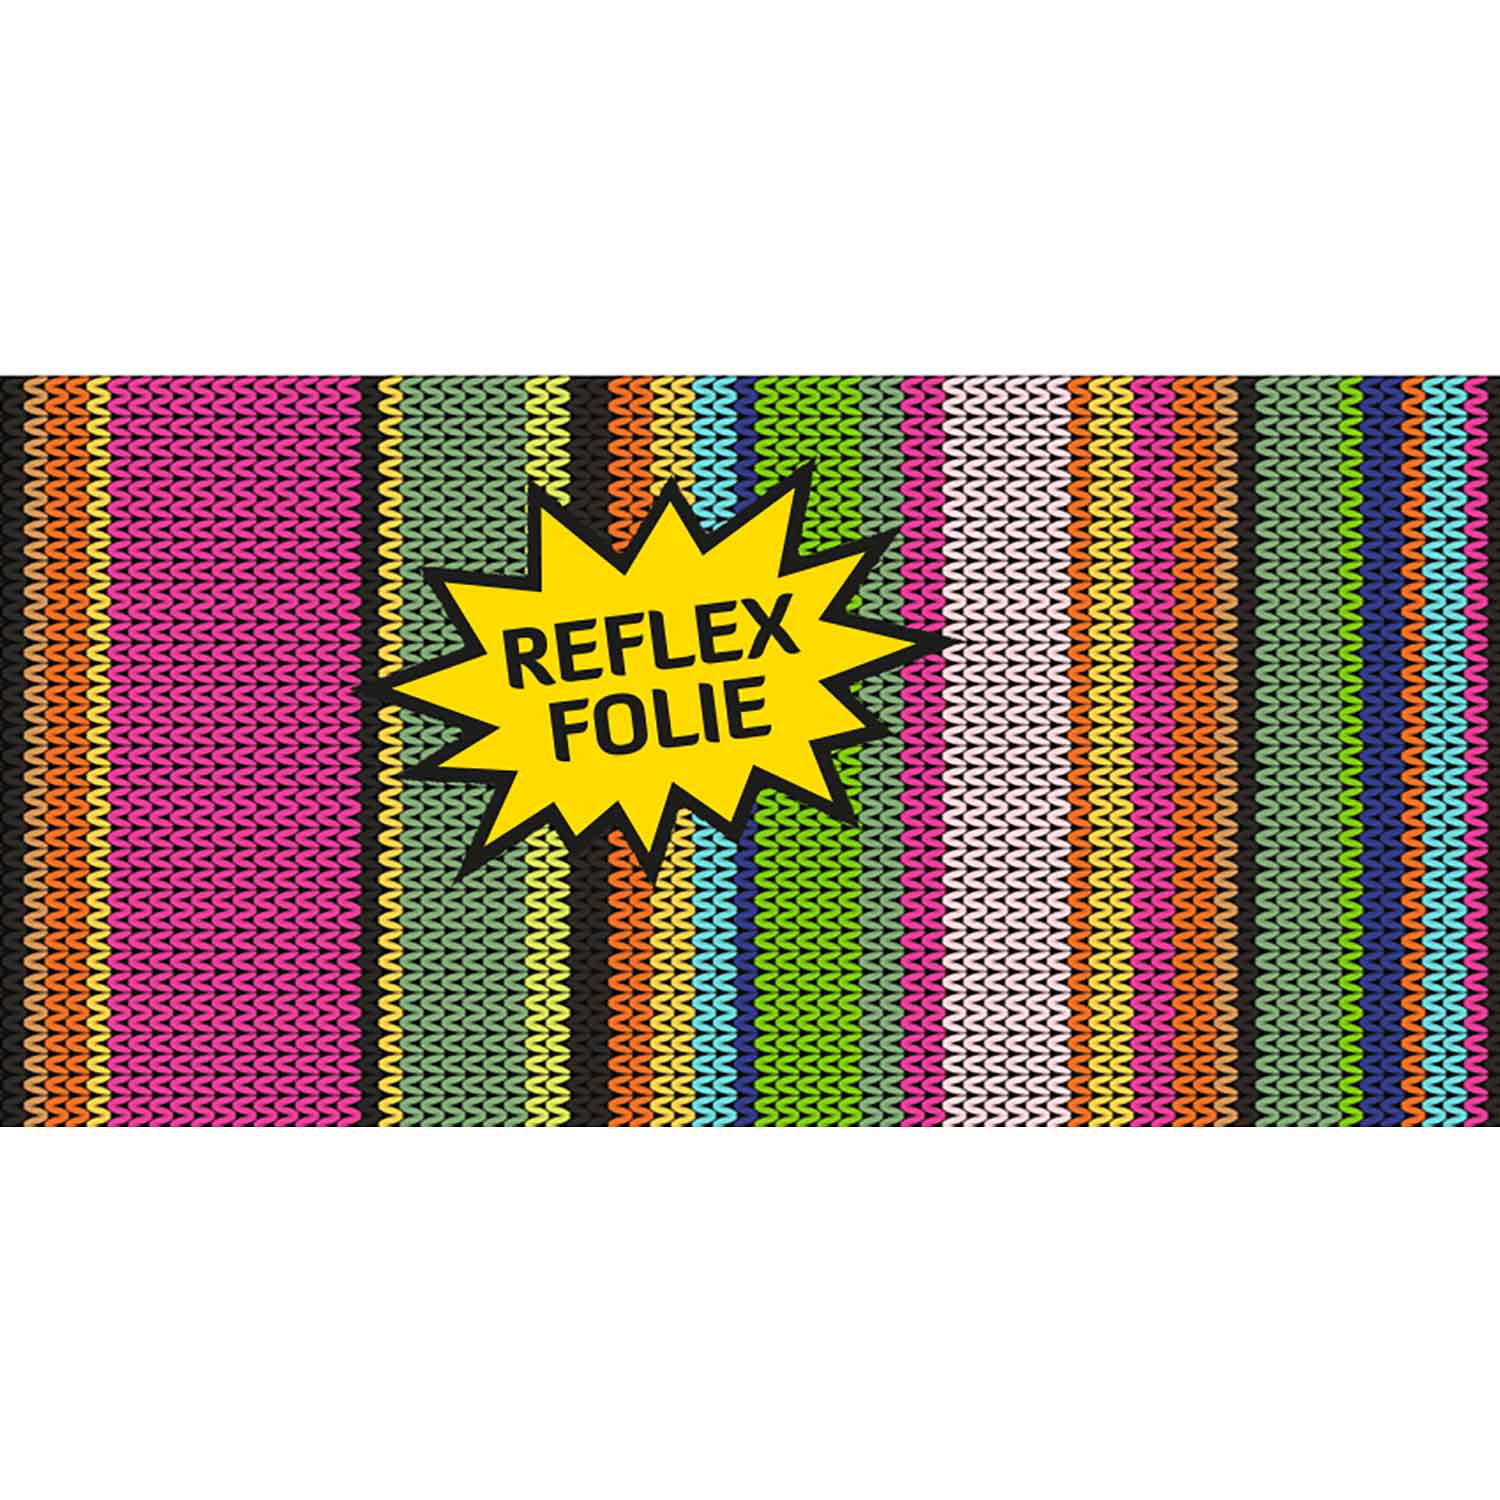 Folie Urban Knitting (Reflex)